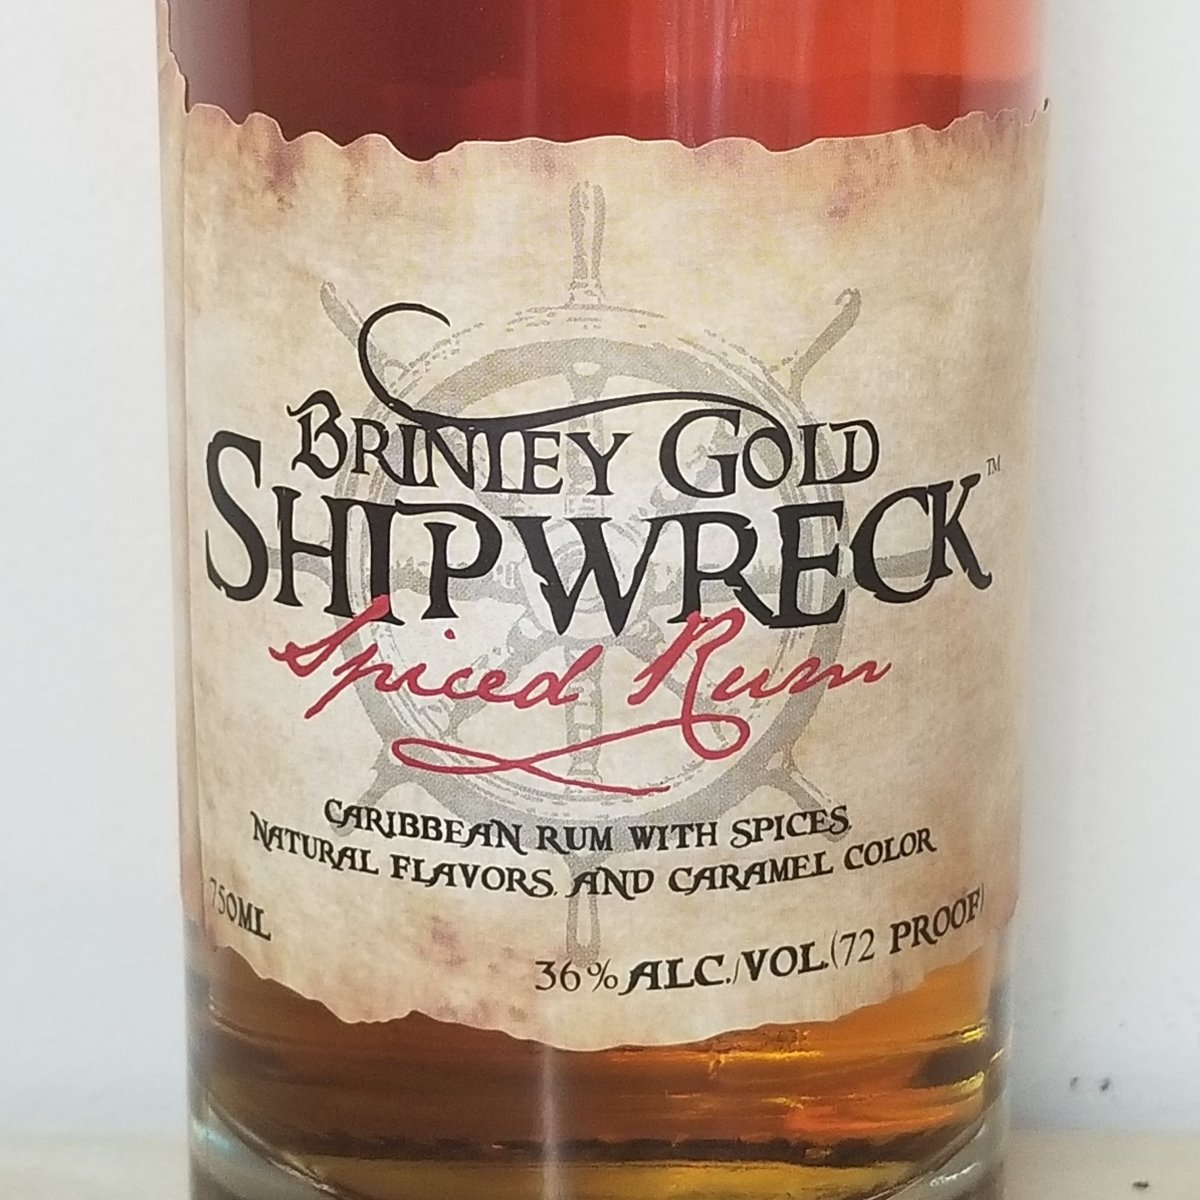 Brinley Gold Shipwreck Spiced Rum (Better than Capt Morgan) 750ml - Sip & Say